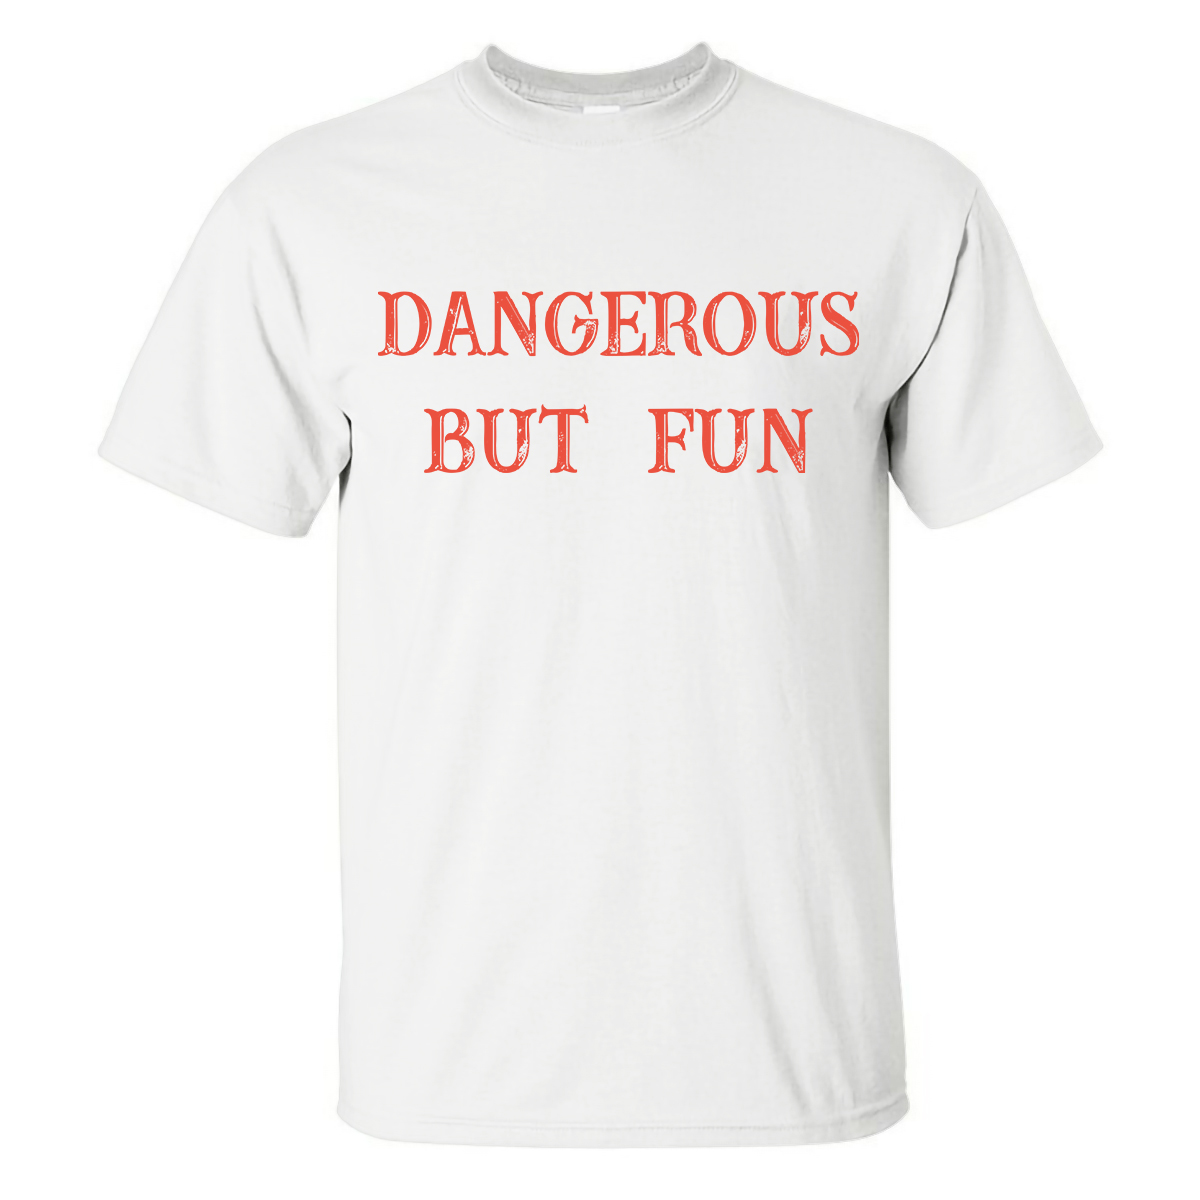 Livereid Dangerous But Fun Printed T-shirt - Livereid